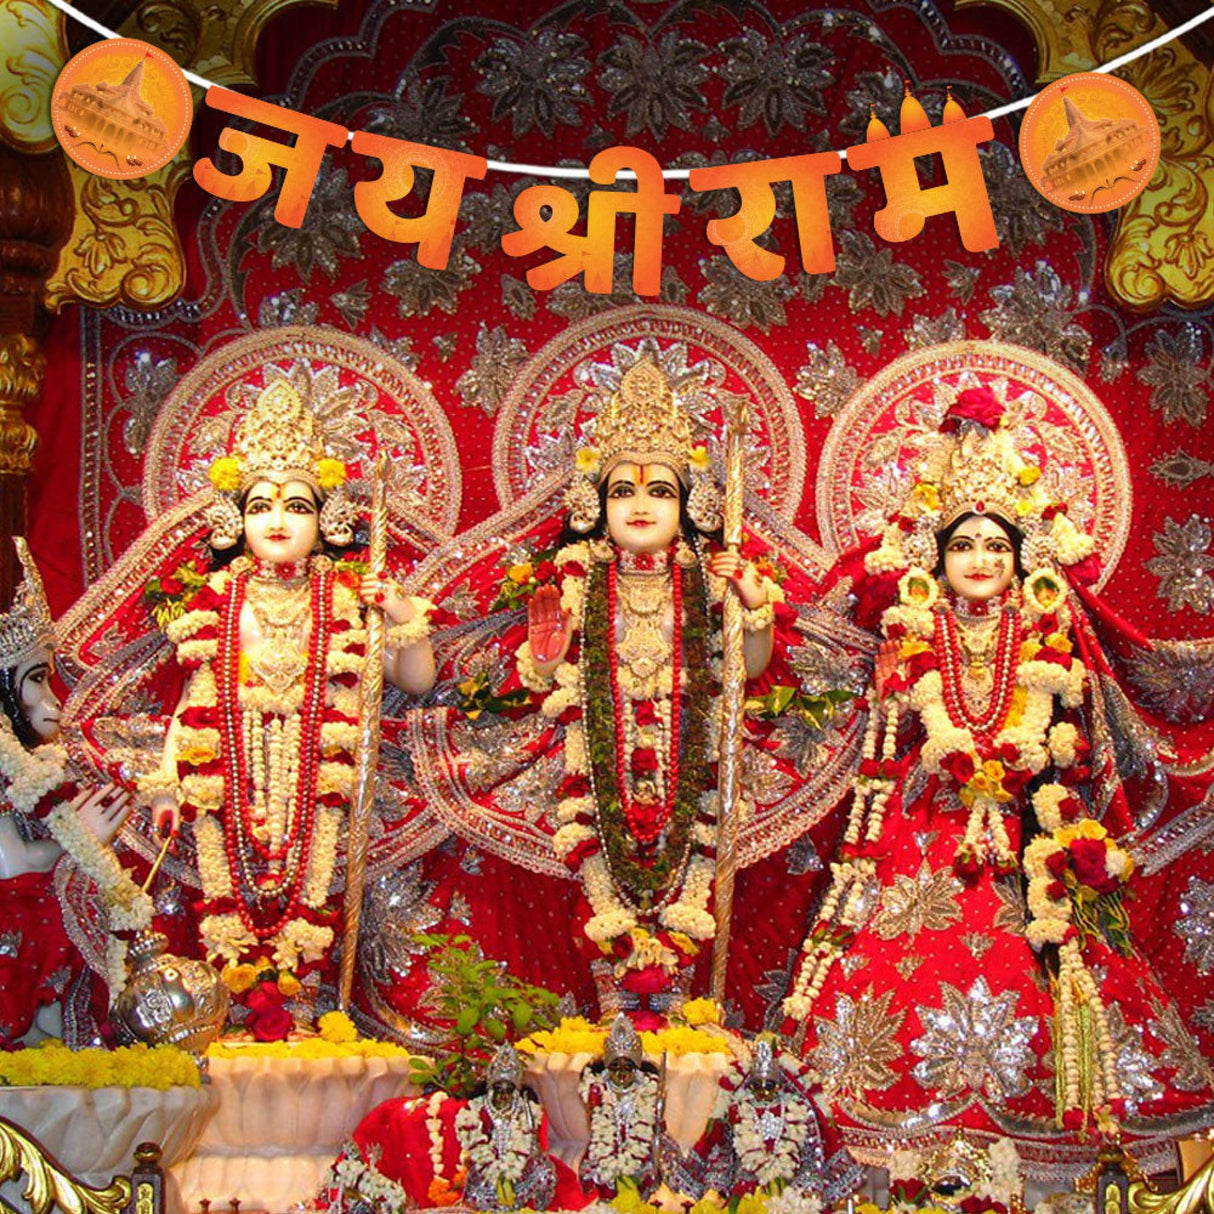 Jai shree ram banner for home temple decorations shri